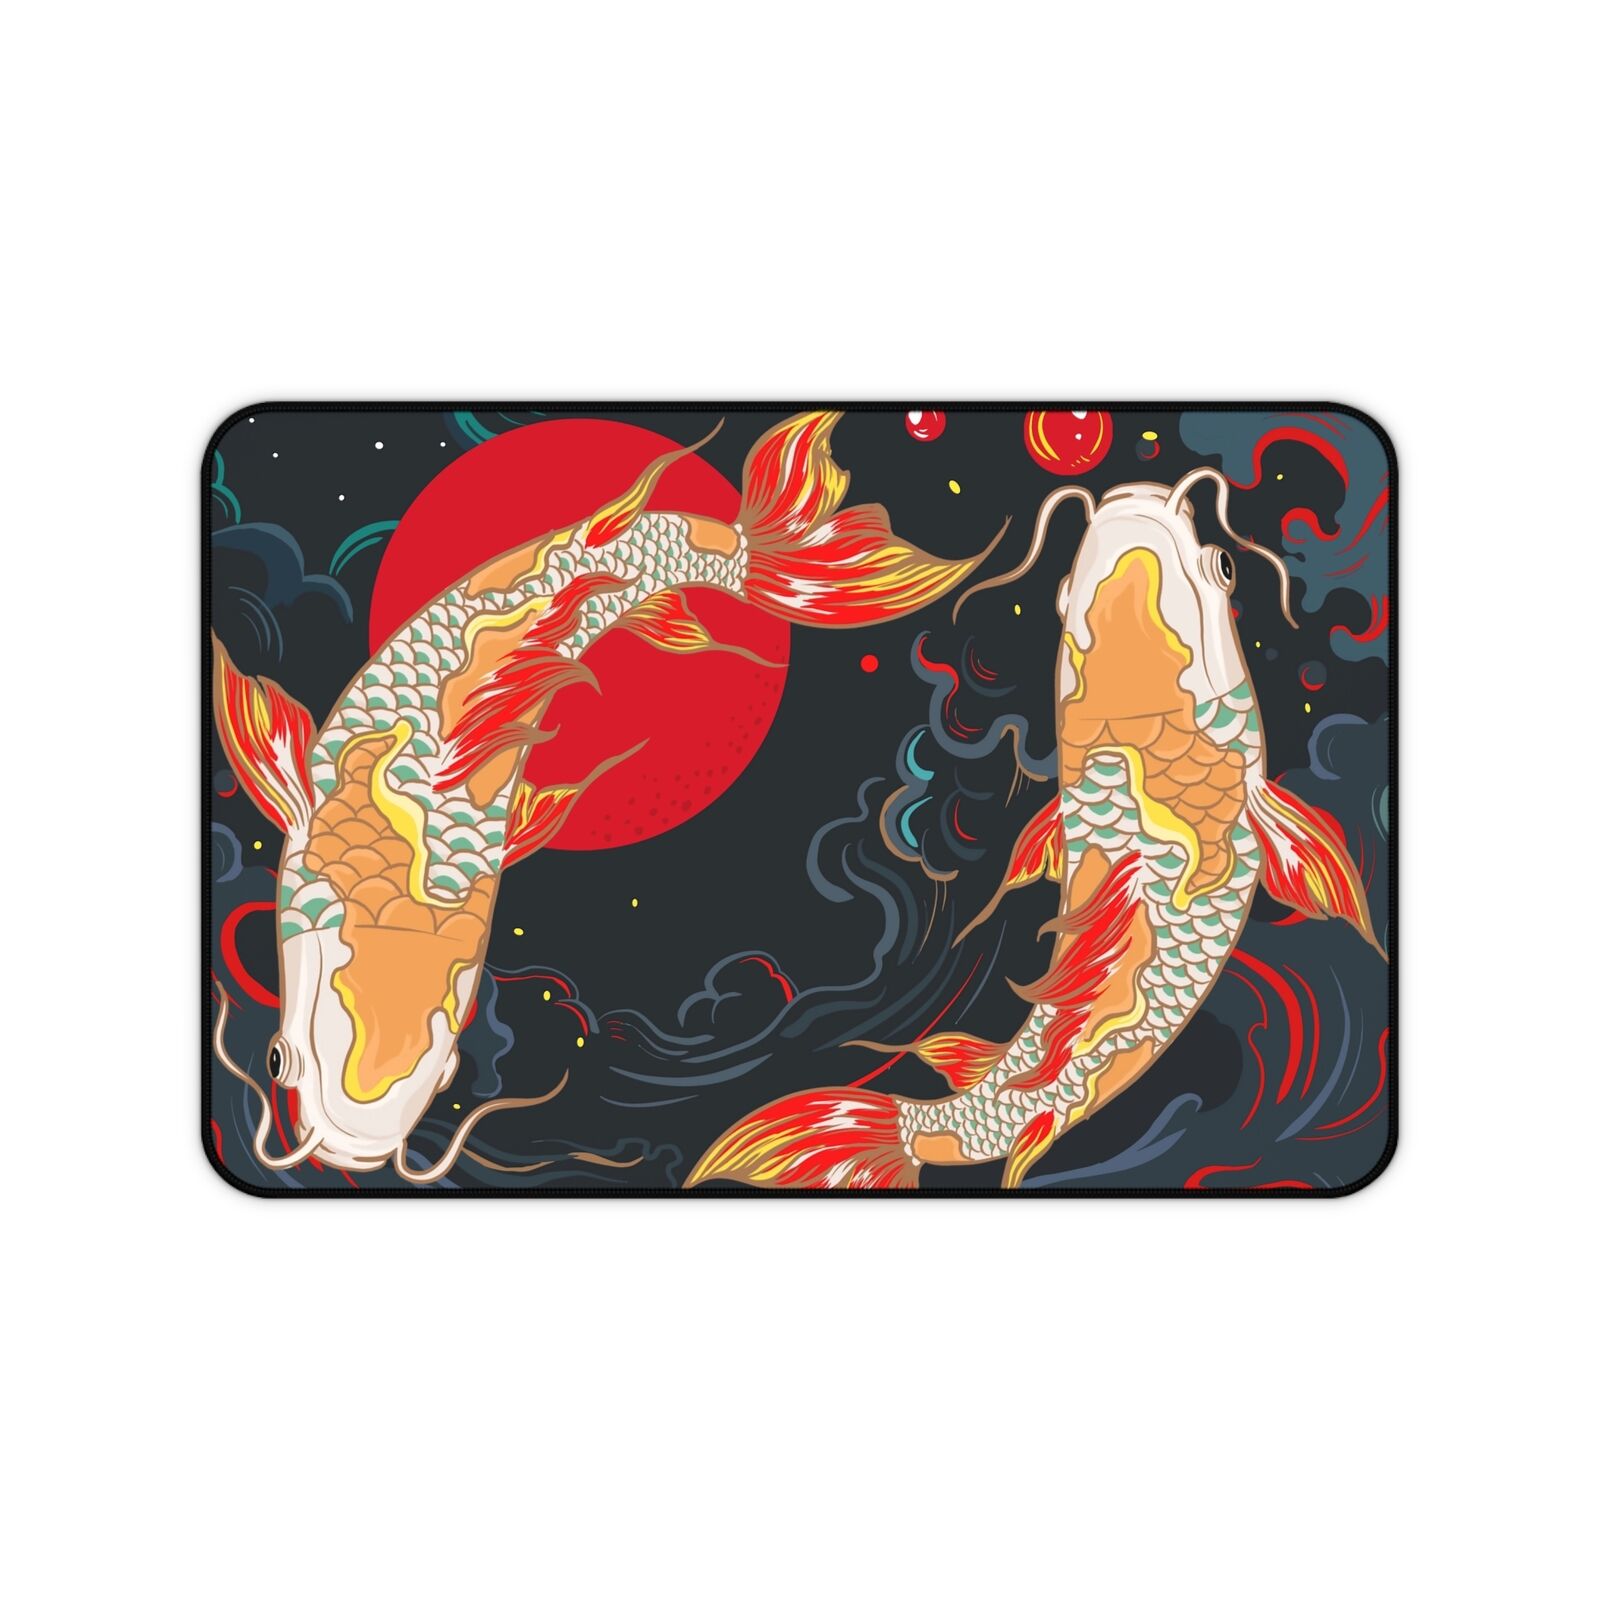 Japanese Coy Fish Art - Japan Inspired - Premium Desk Mat Mouse Pad